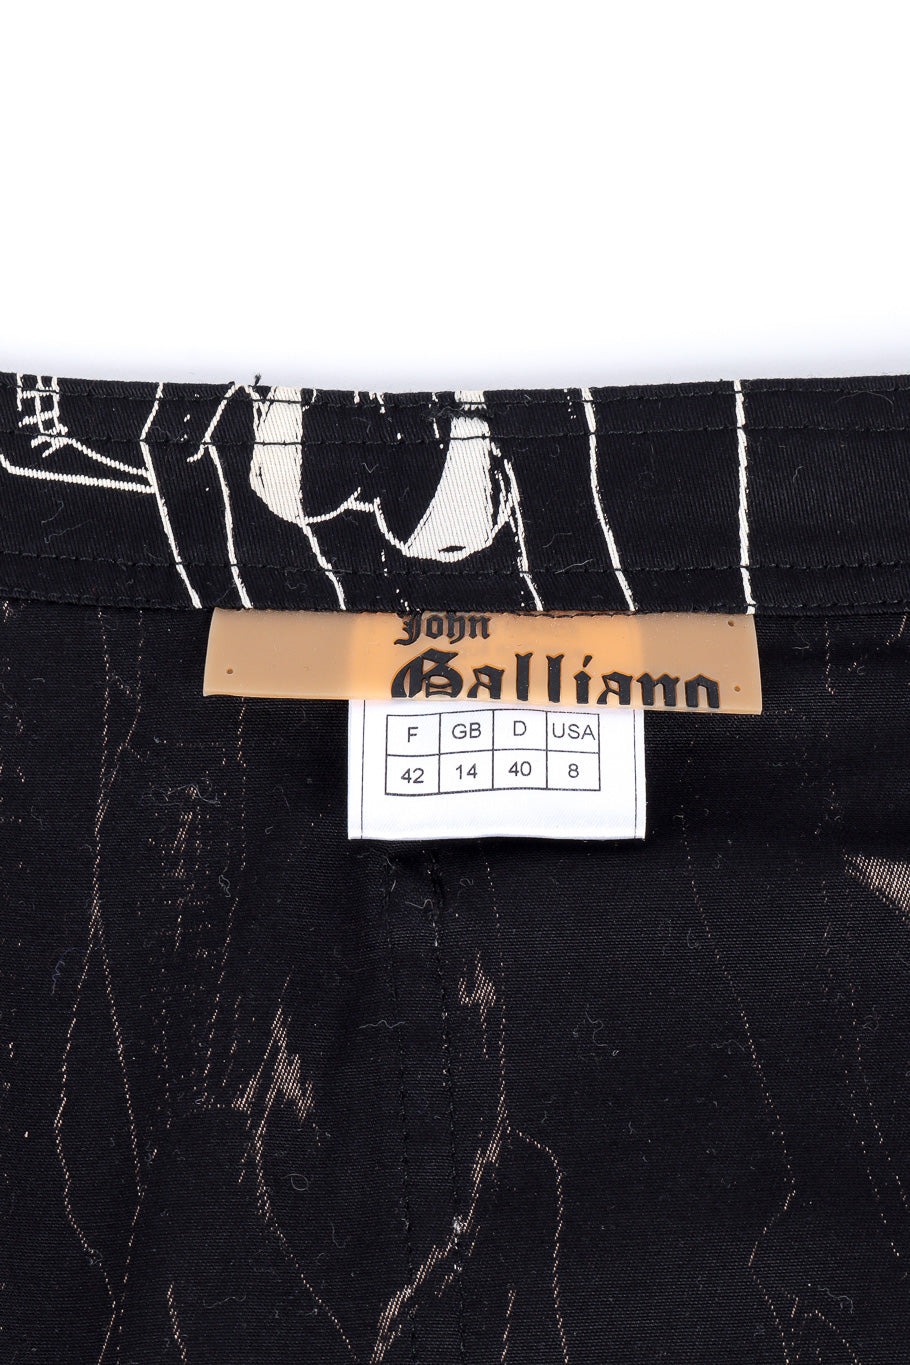 Wrap skirt by John Galliano label @recessla